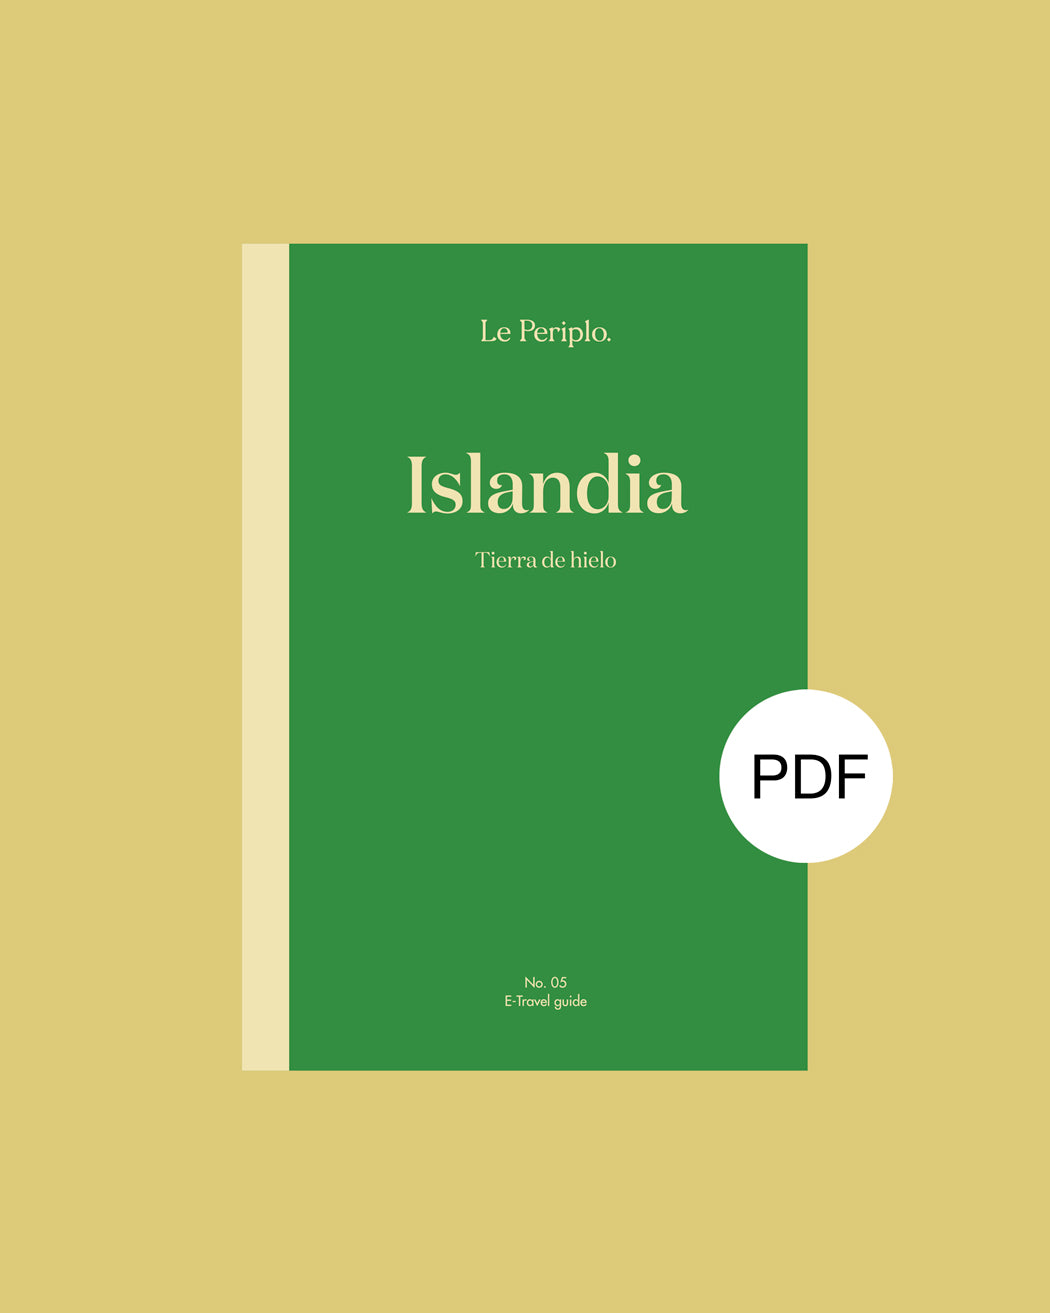 Iceland (digital) Spanish version